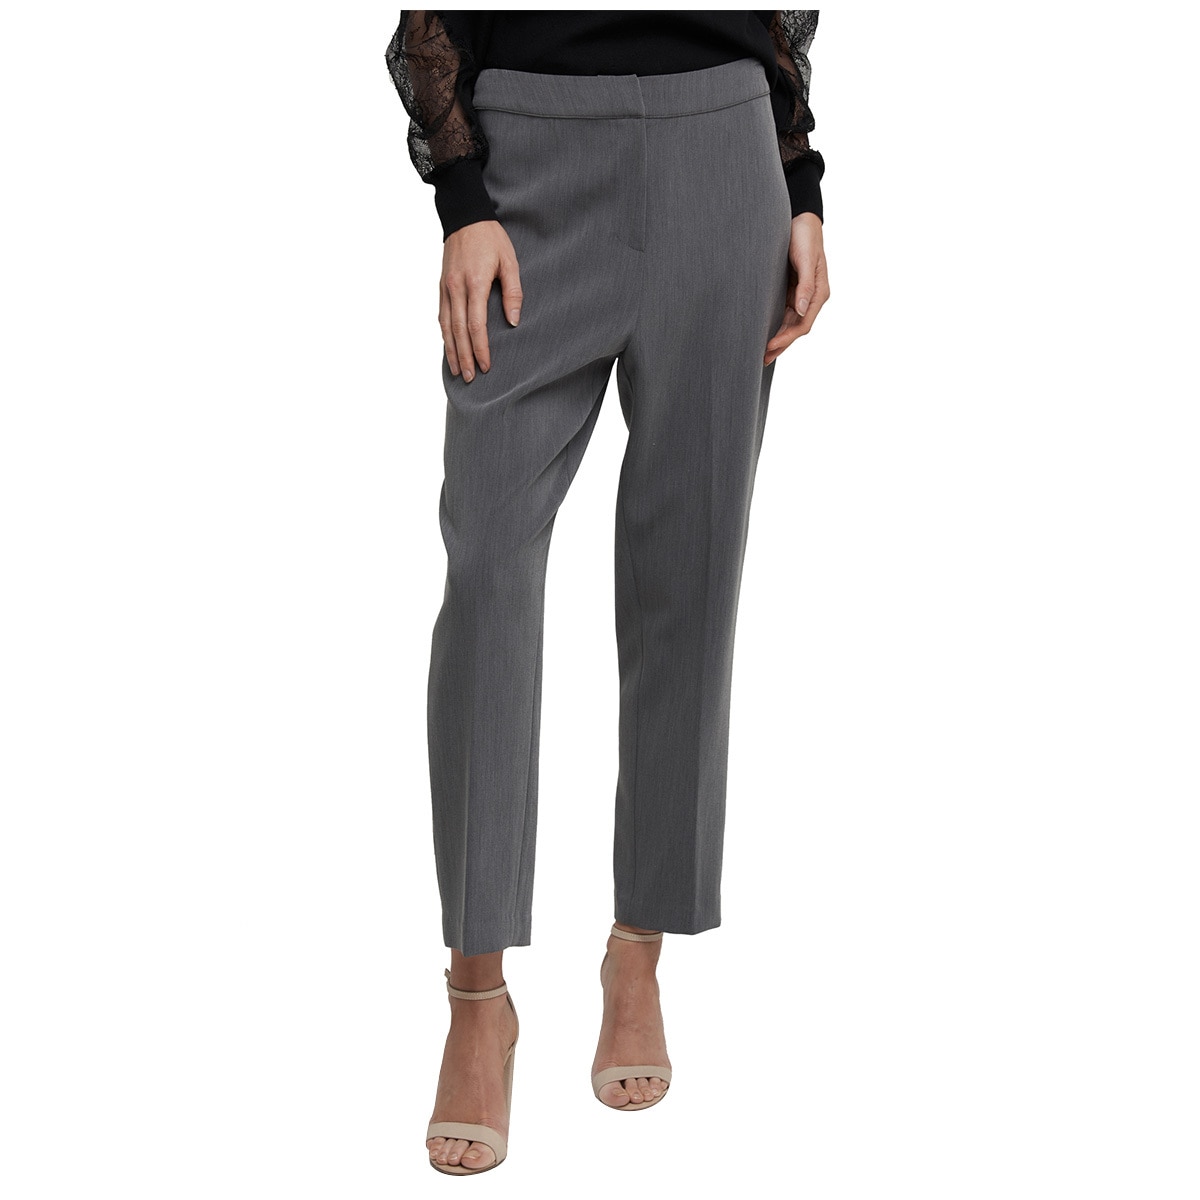 Cooper St Women's Suit Pant - Grey